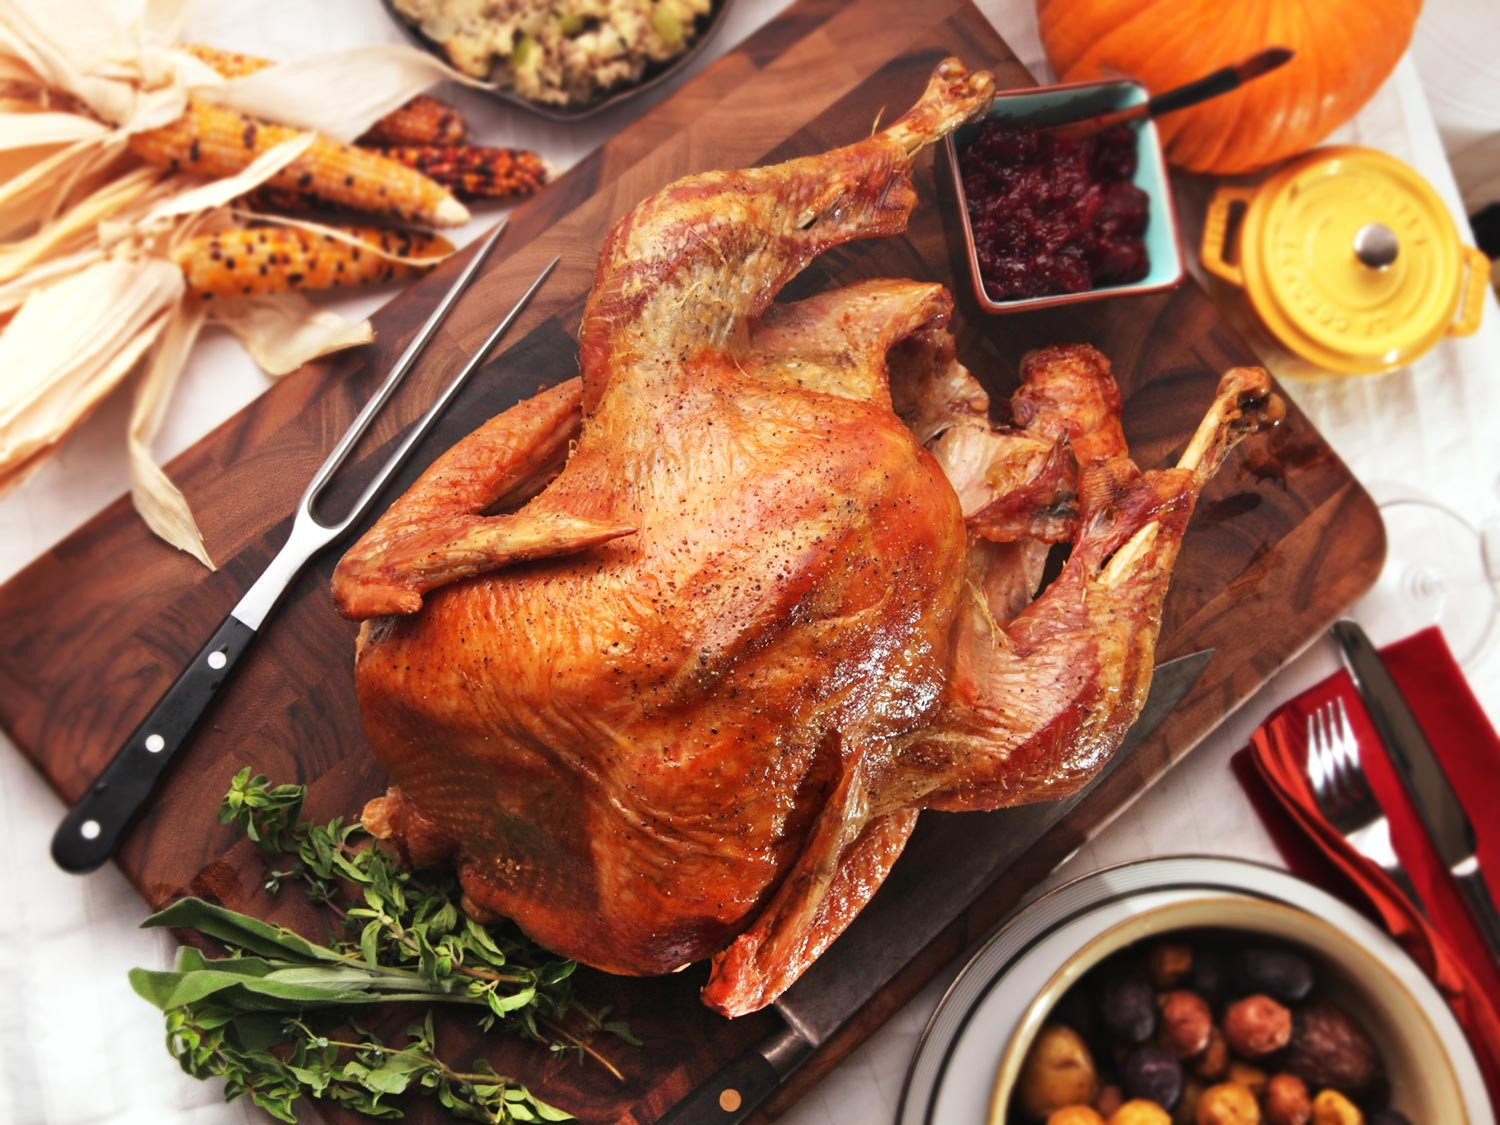 Roasted Turkey Recipes Thanksgiving
 The Best Simple Roast Turkey With Gravy Recipe